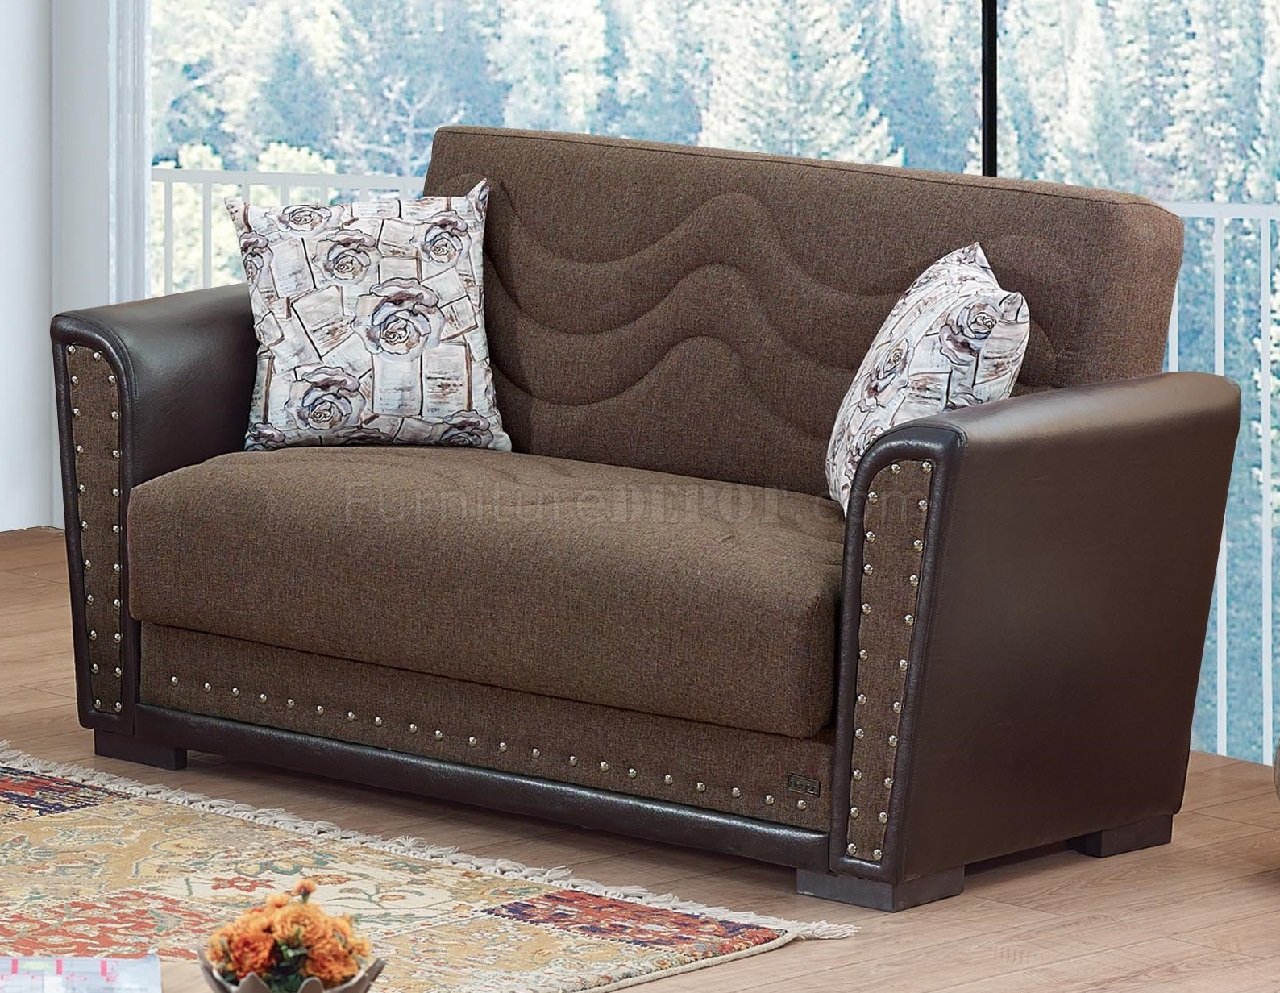 compact sofa bed toronto